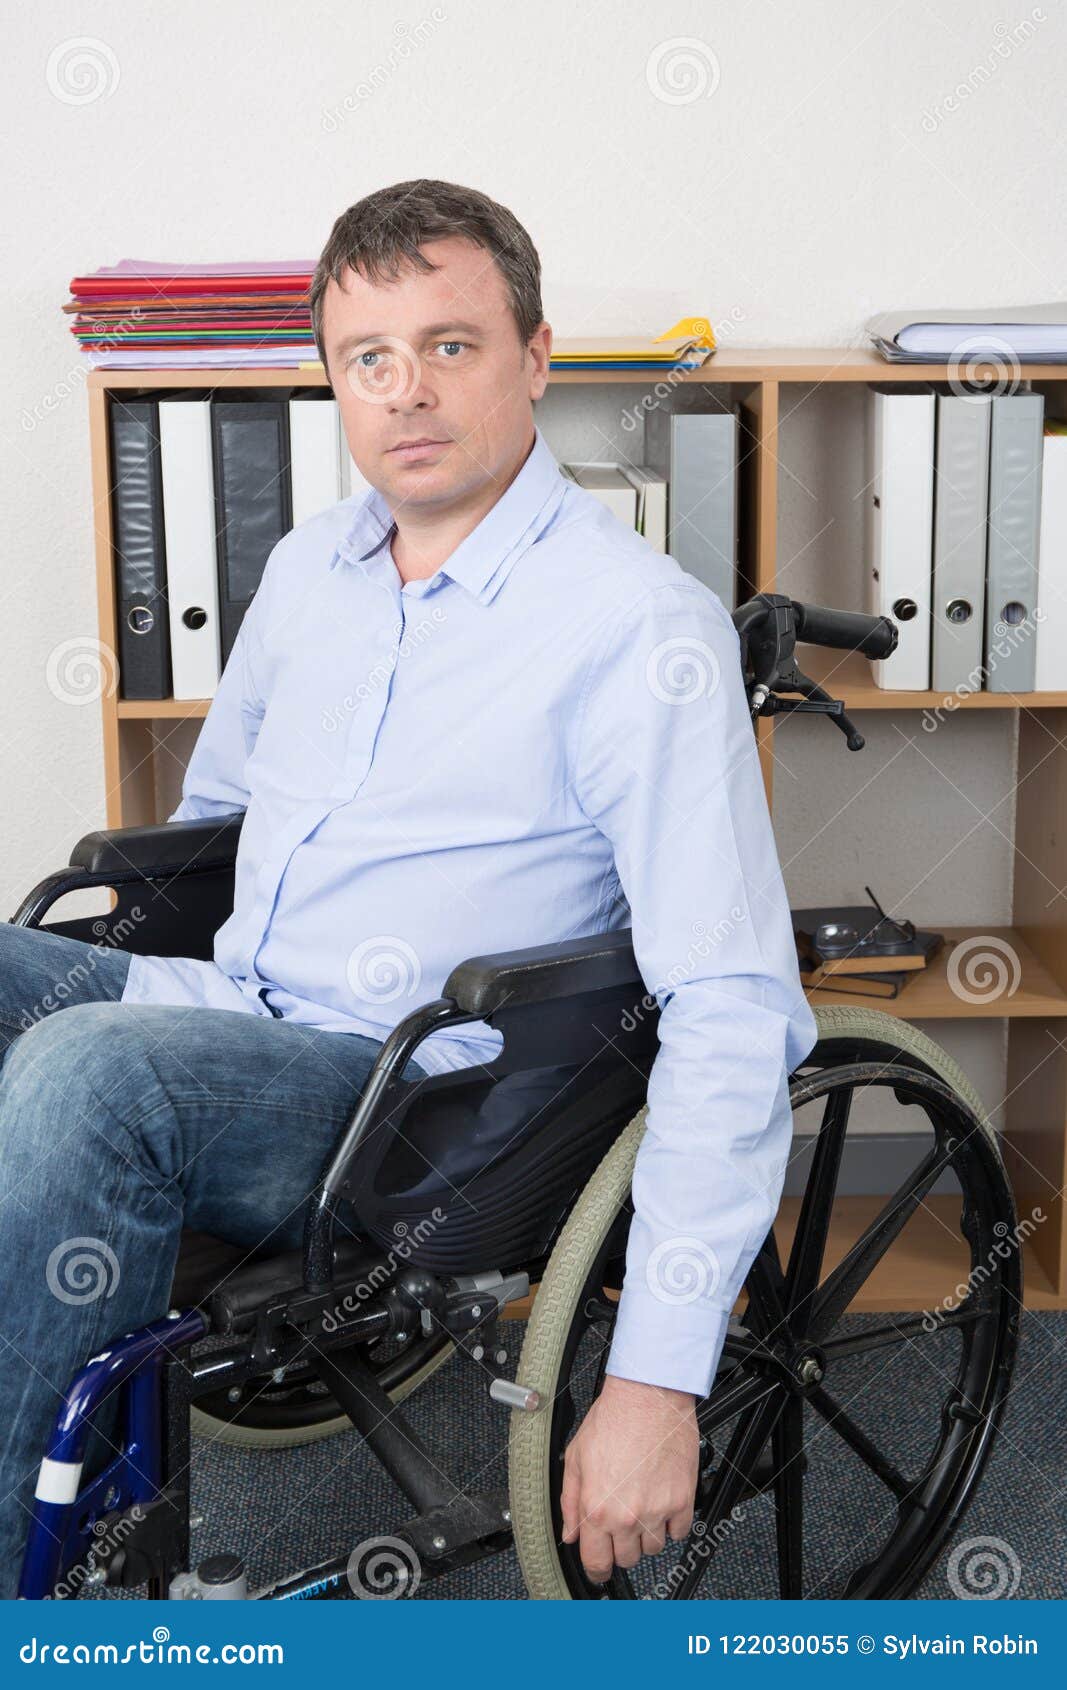 Disabled Man in Wheelchair Looking at Camera at Office Job Stock Image ...